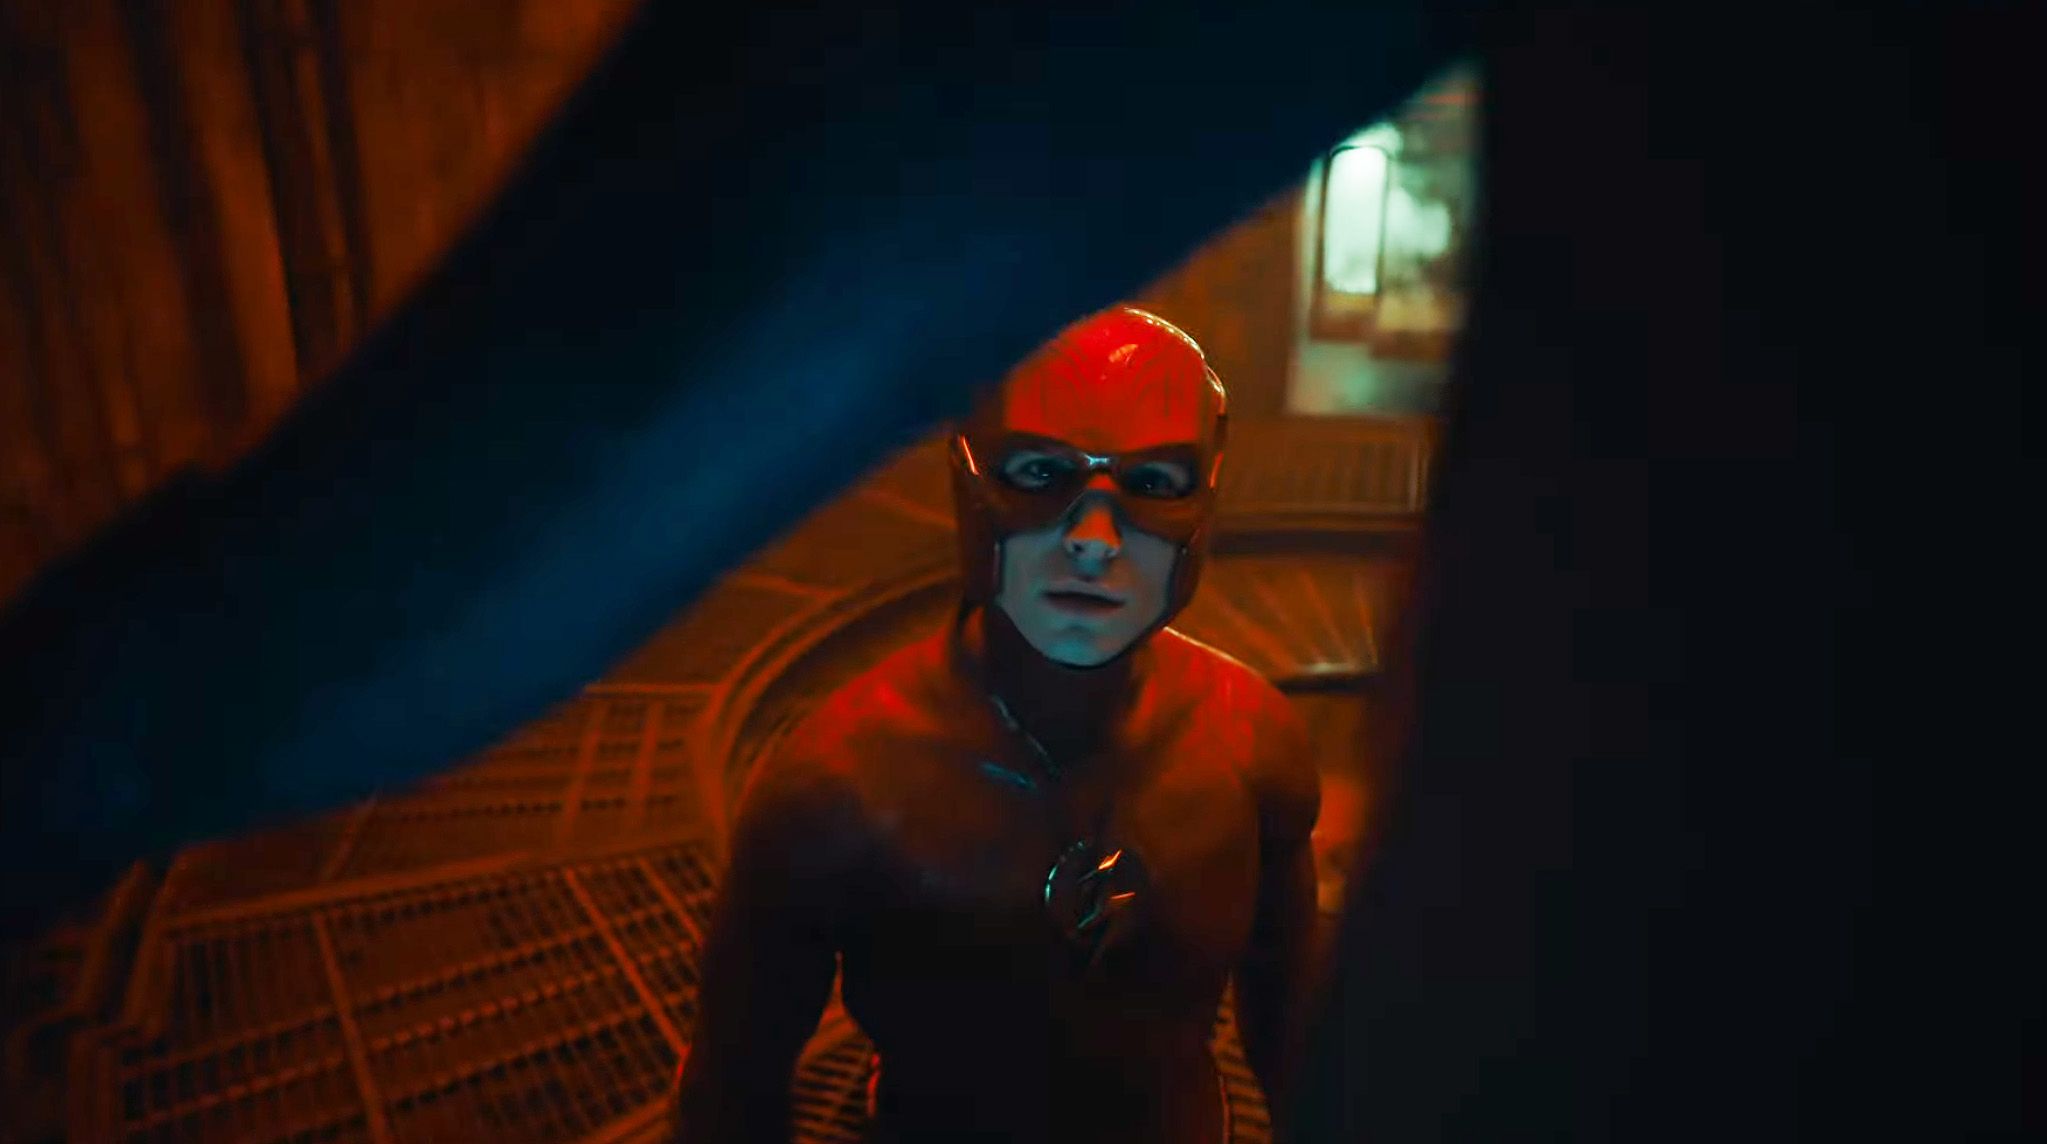 The Flash Full Look At Ezra Miller’s Costume